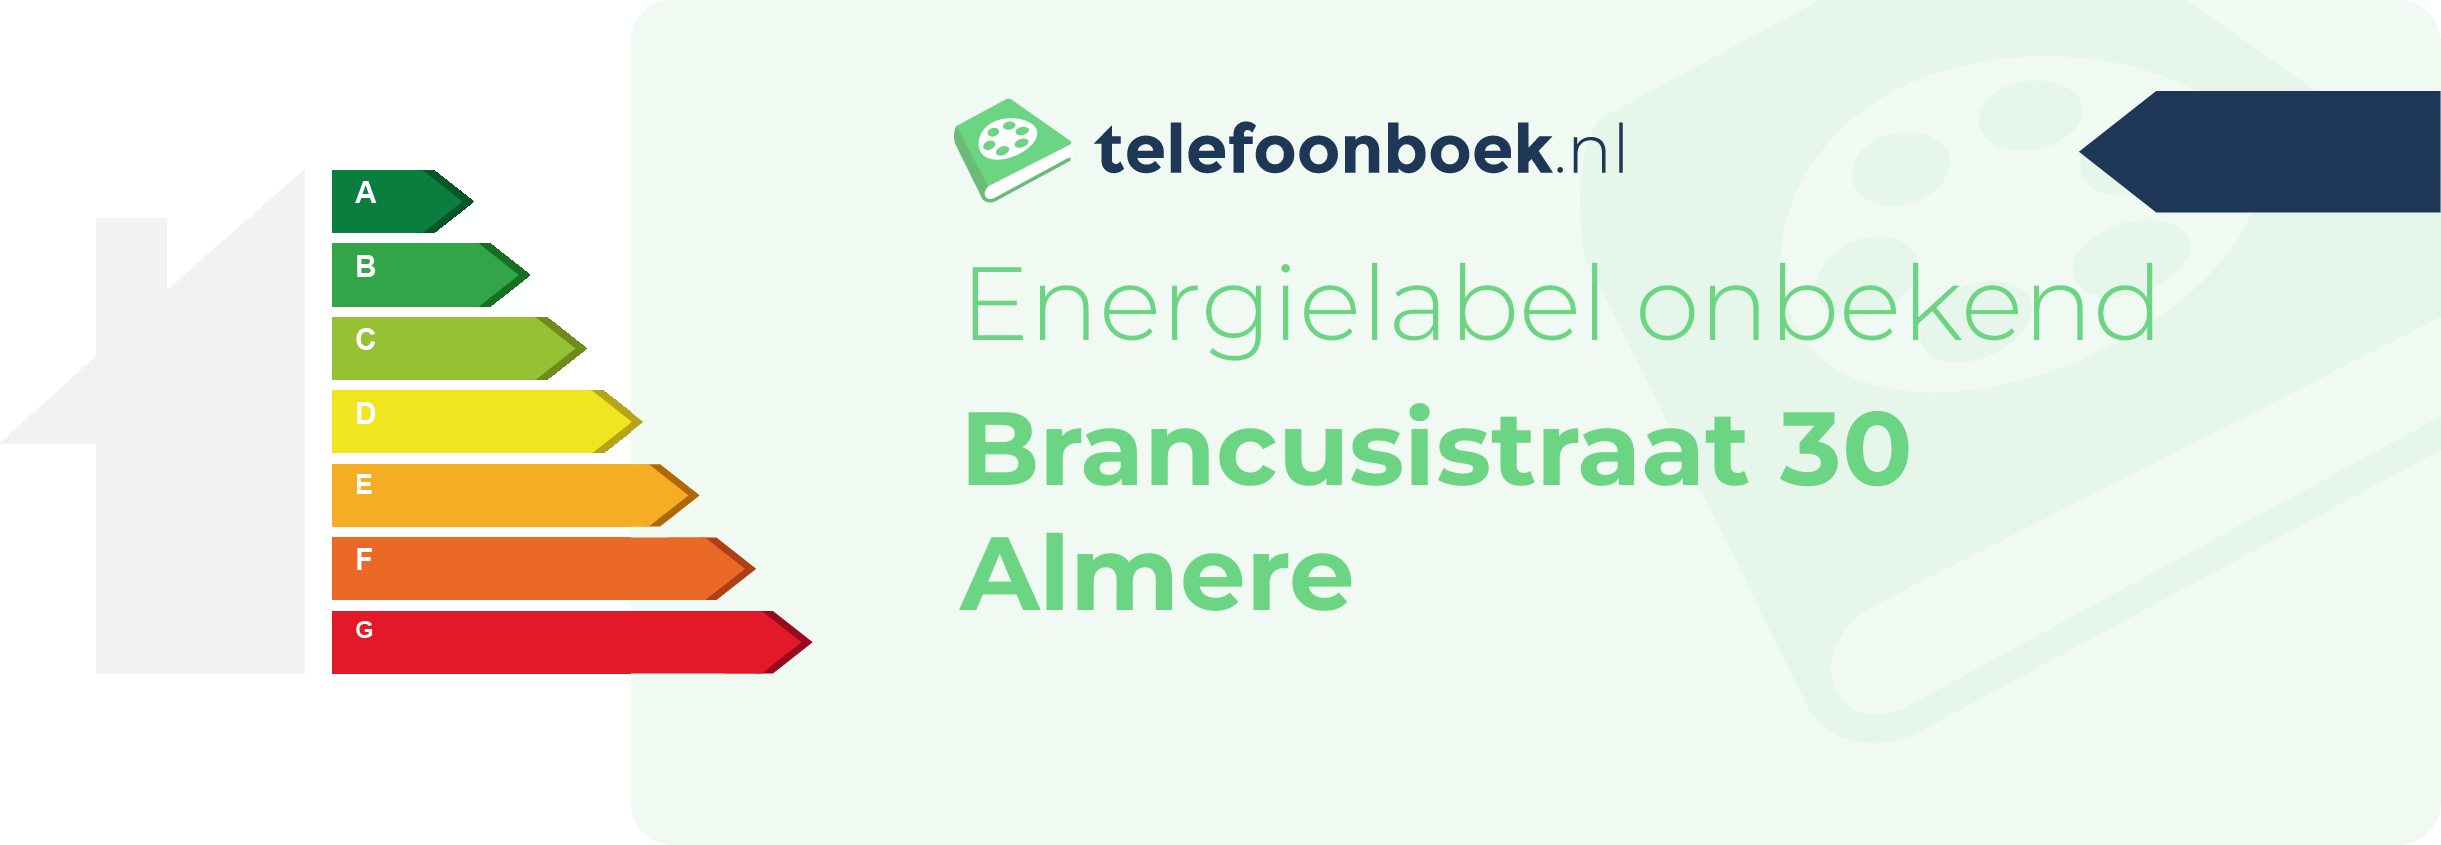 Energielabel Brancusistraat 30 Almere